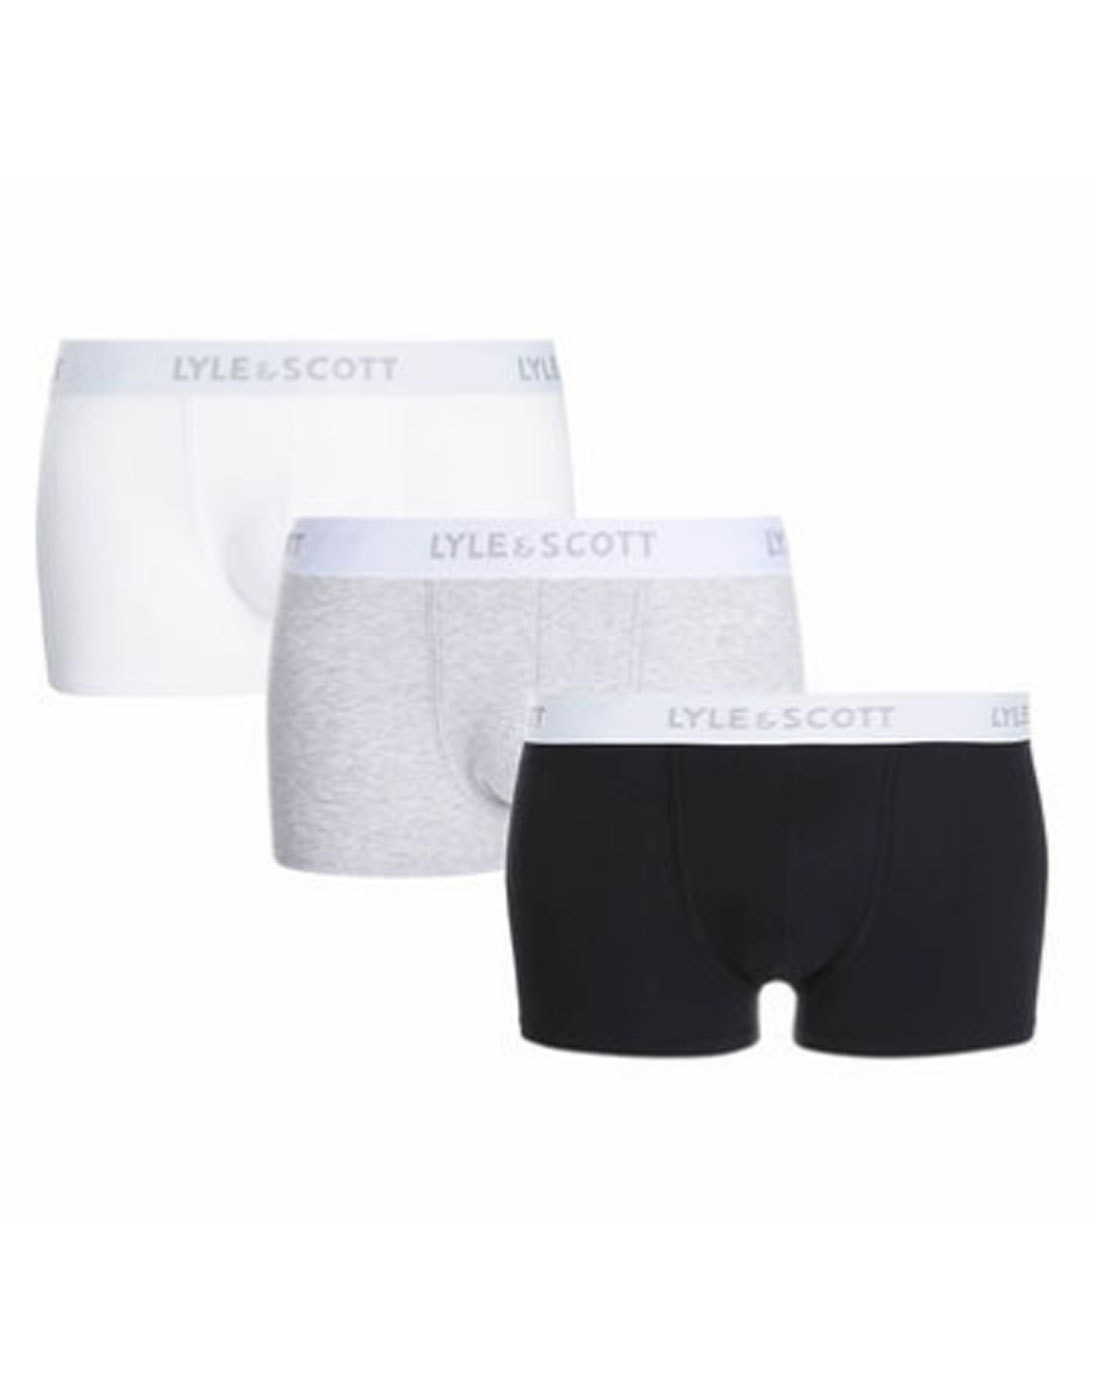 3 Pack LYLE & SCOTT Boxer shorts Black/grey/white